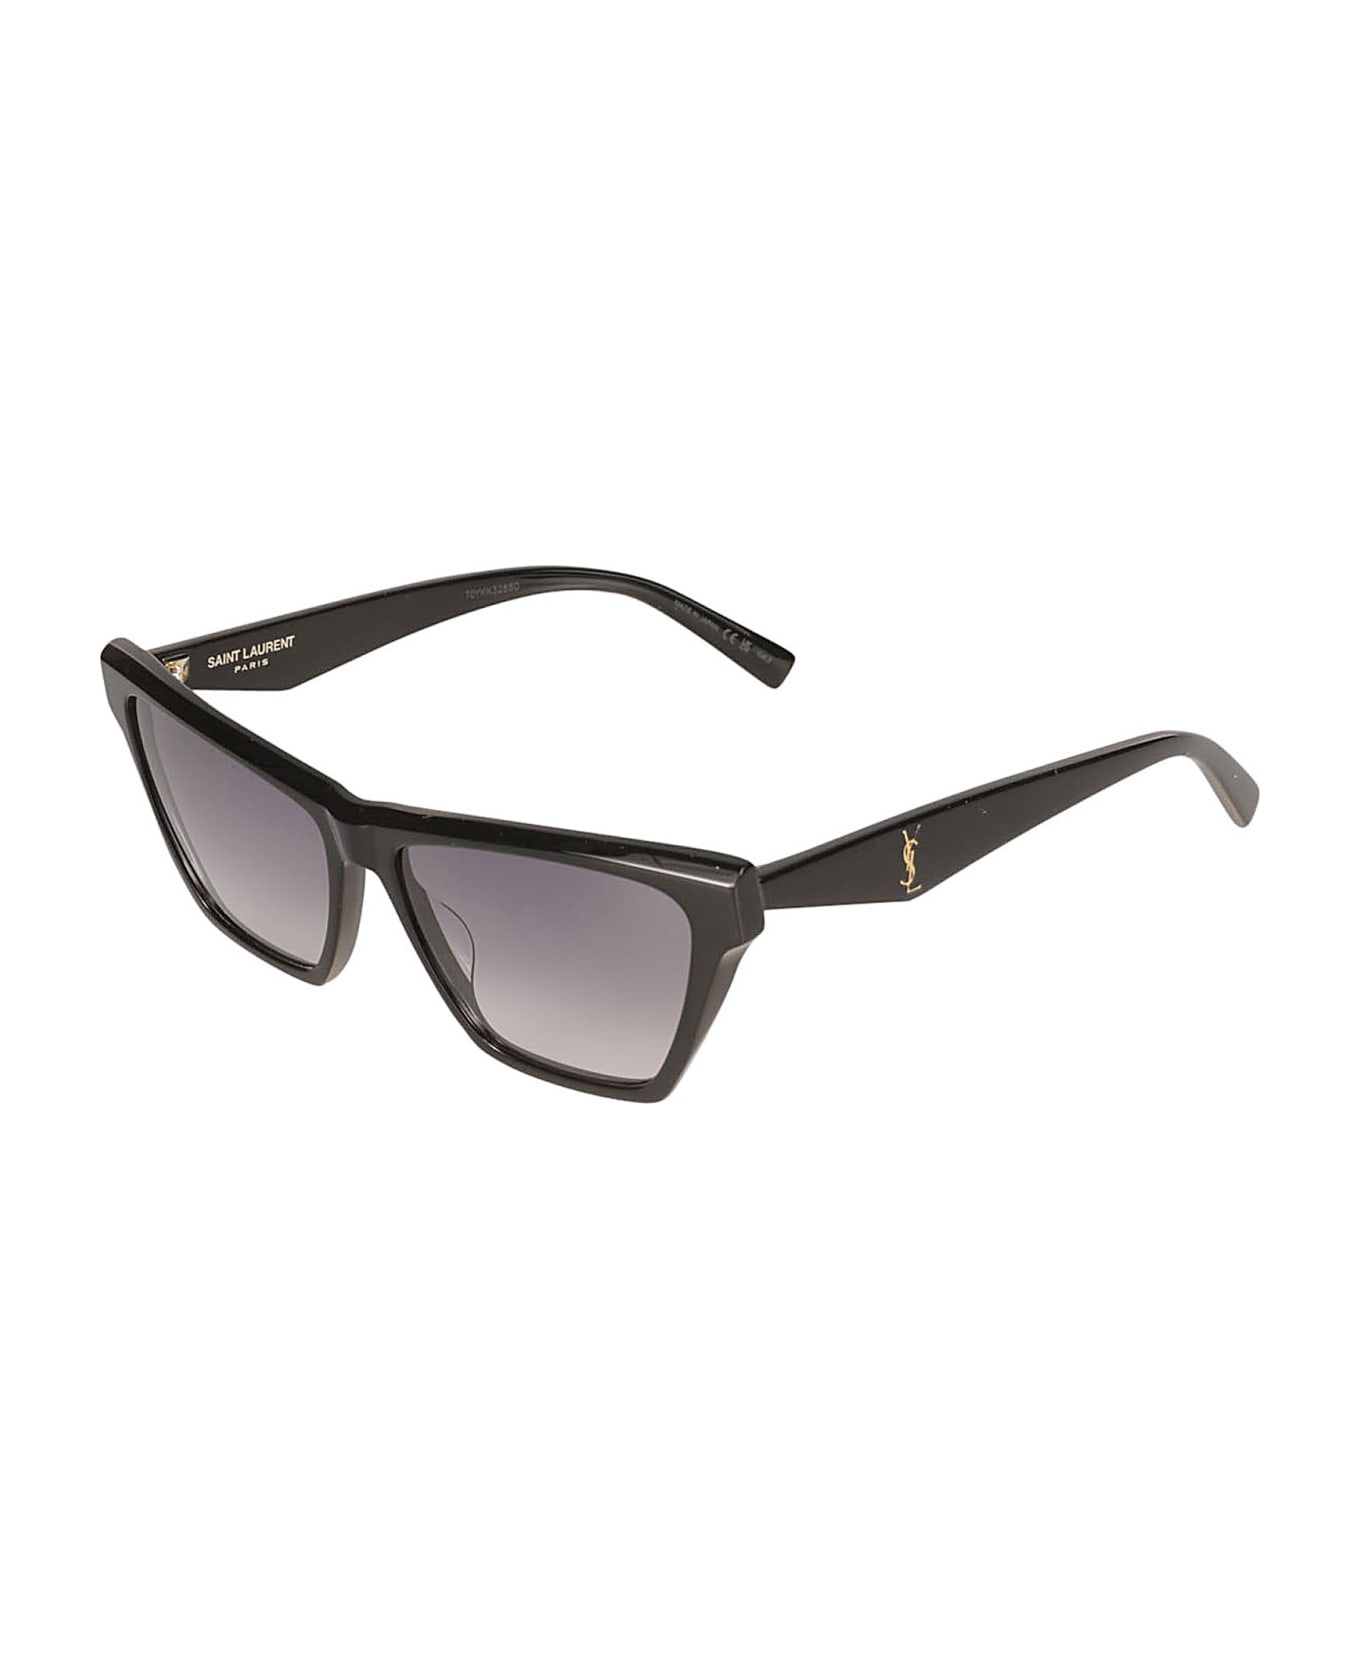 Saint Laurent Eyewear Ysl Plaque Square Frame Sunglasses - Black/Grey